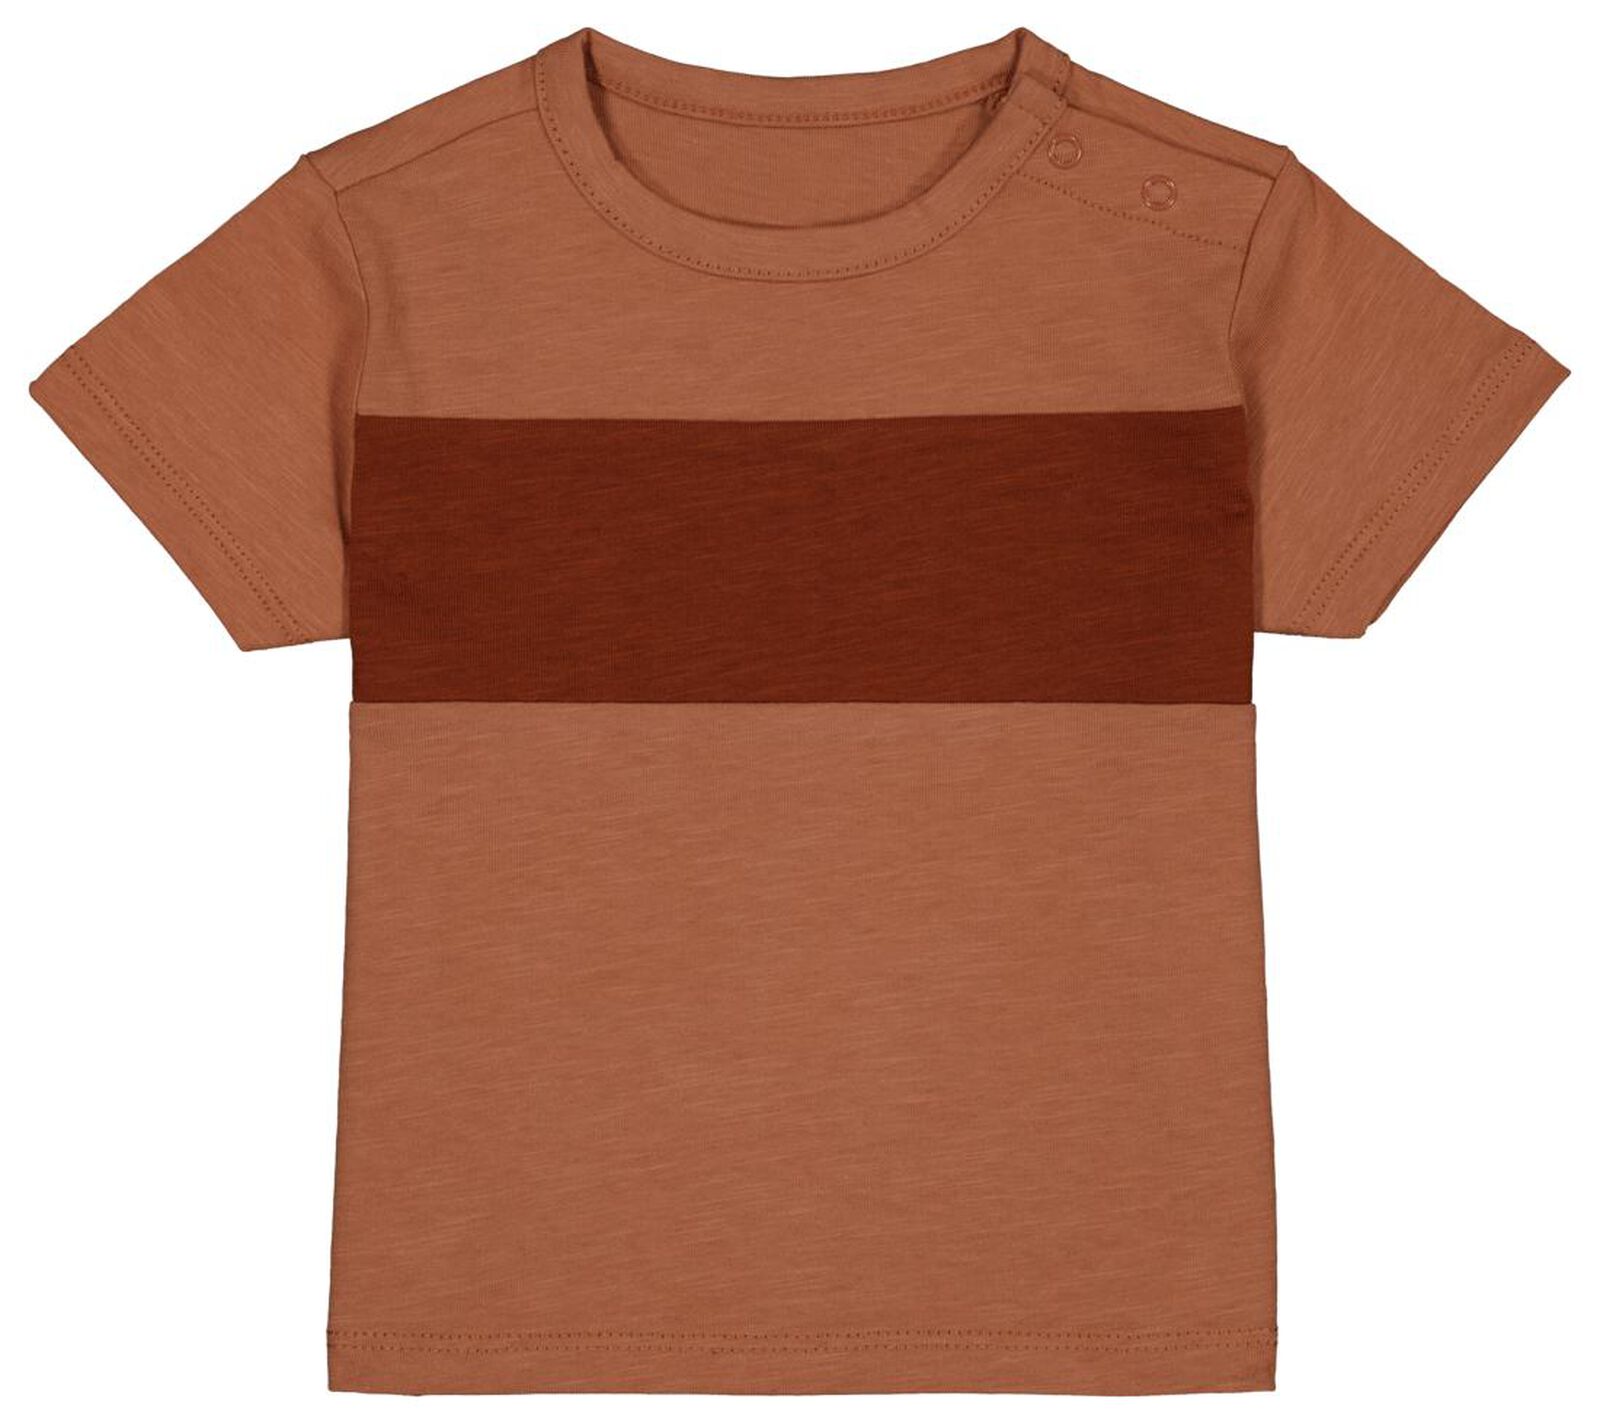 Kinder-T-Shirt, Colorblocking braun - HEMA